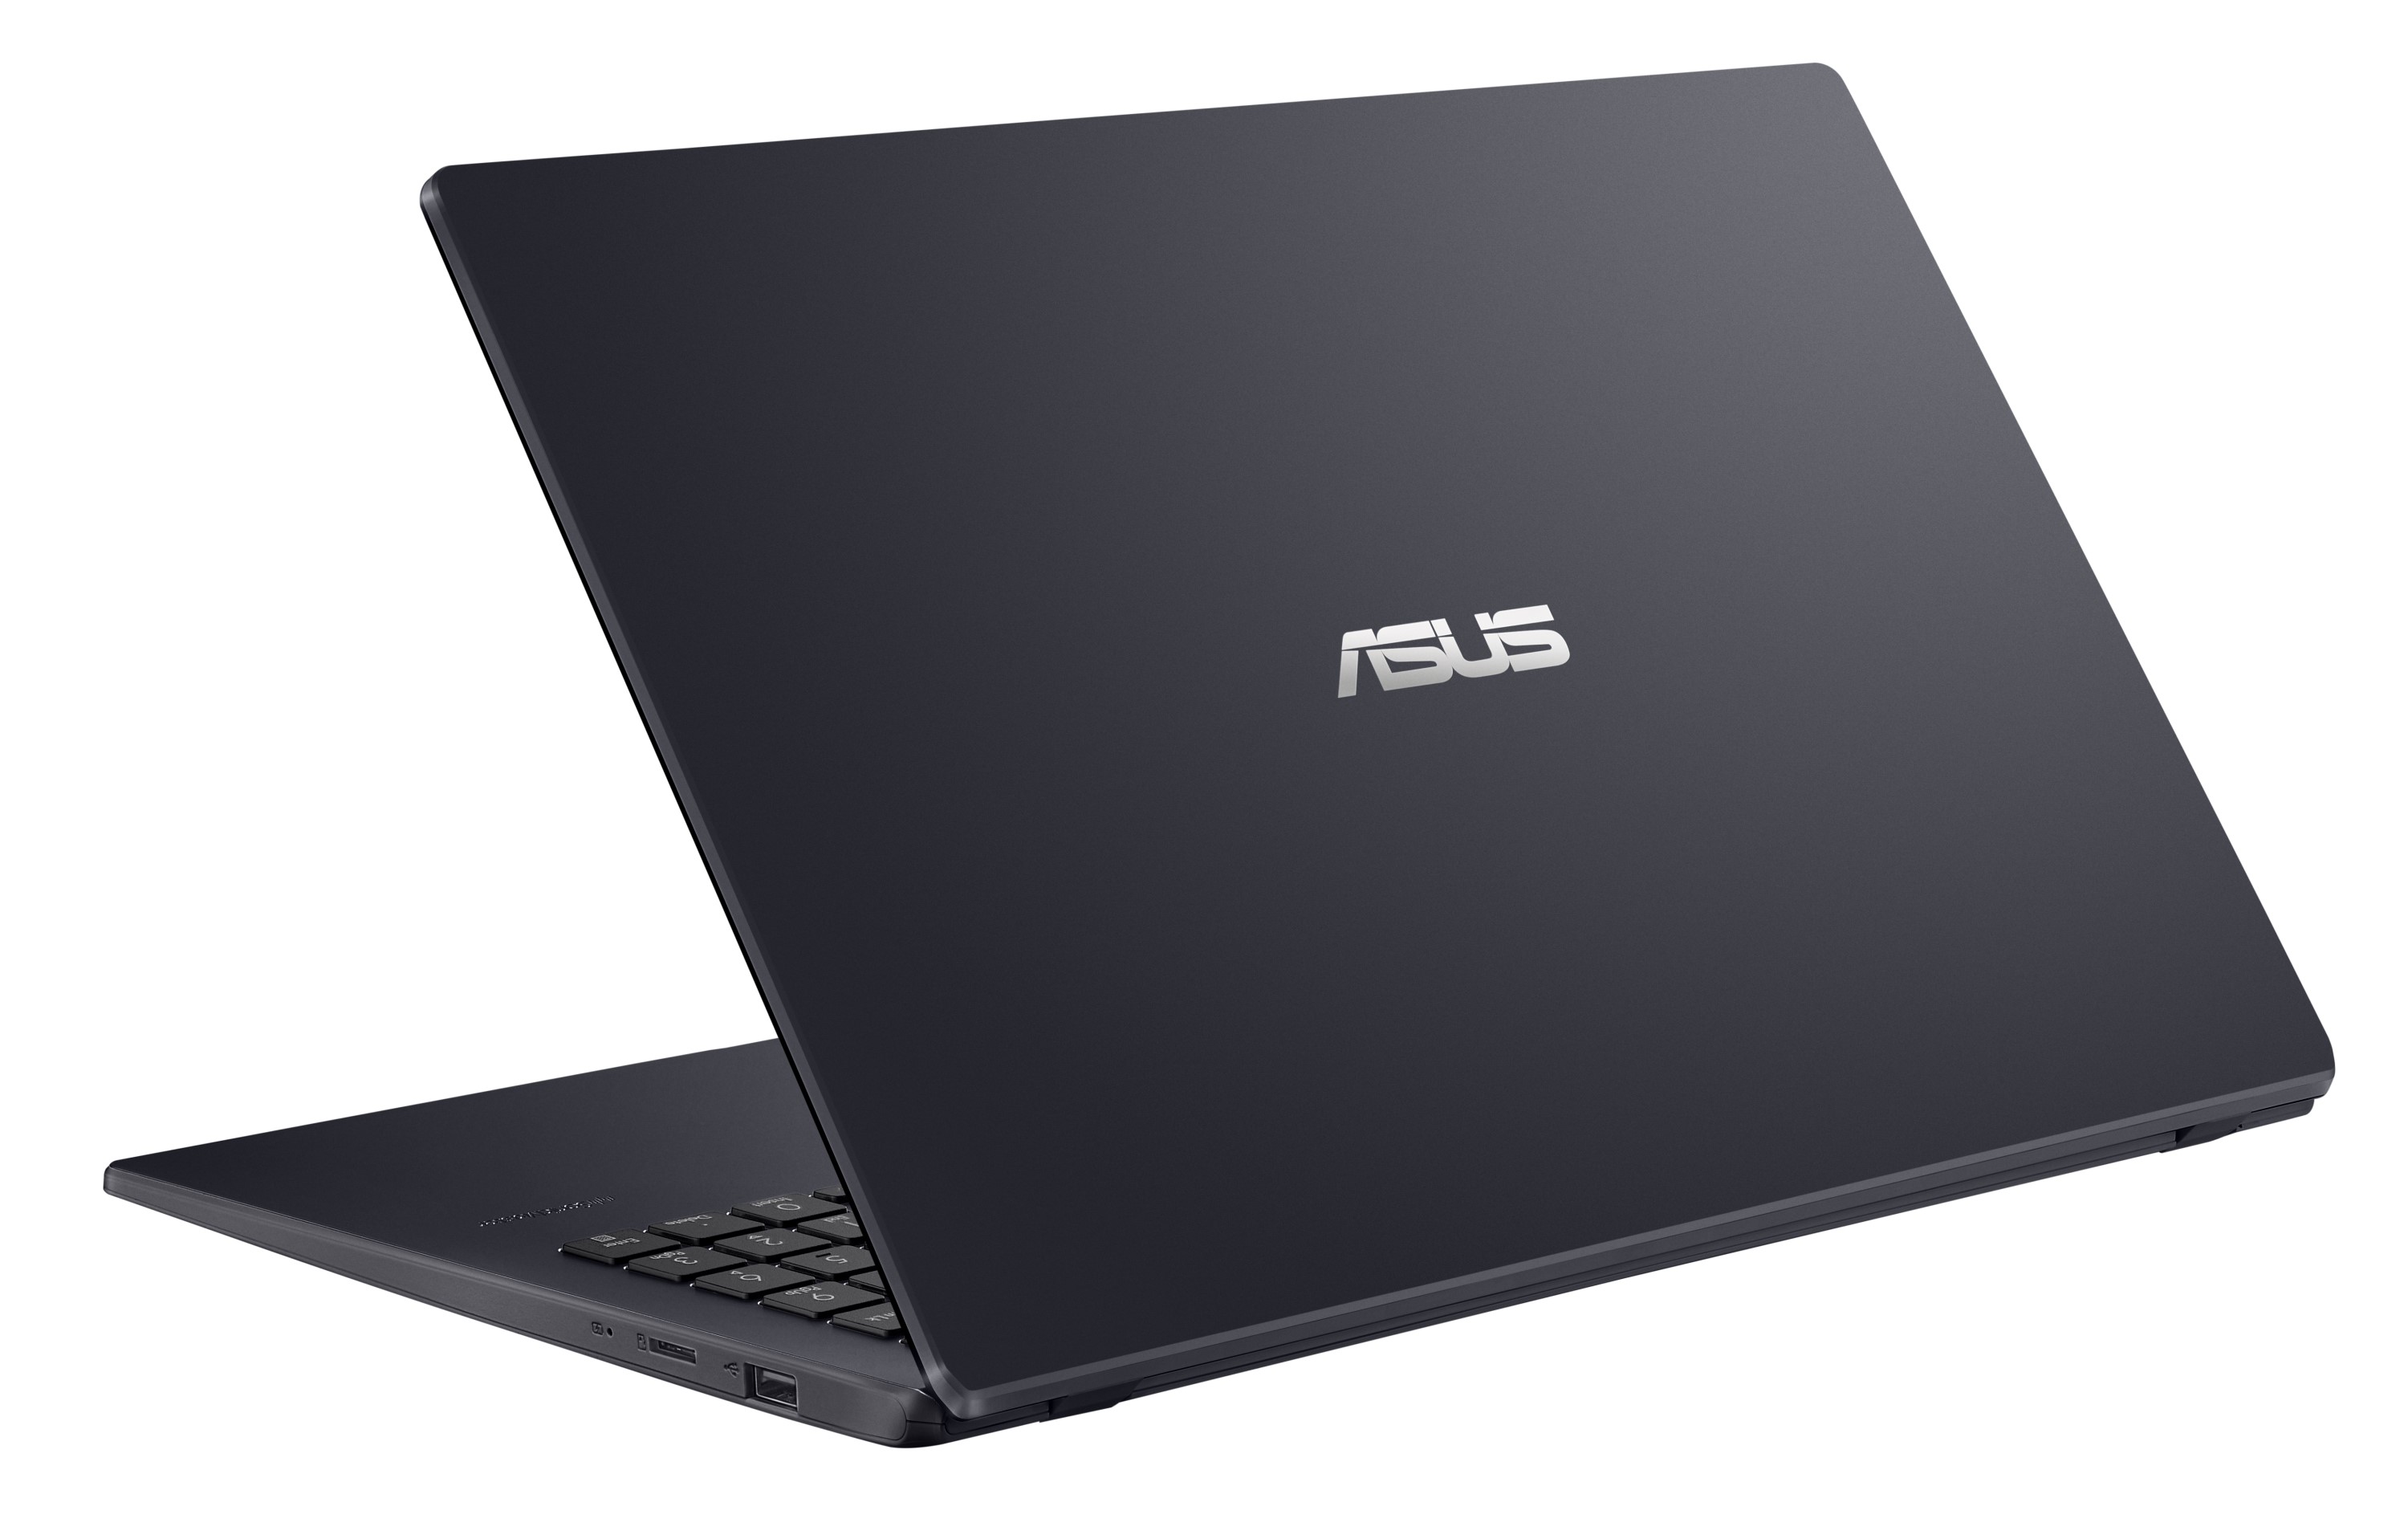 ASUS 15.6" FHD PC Laptop, Intel Celeron N4020, 4GB RAM, 128GB SSD, Windows 10 S Mode, L510MA-WB04 - image 5 of 10